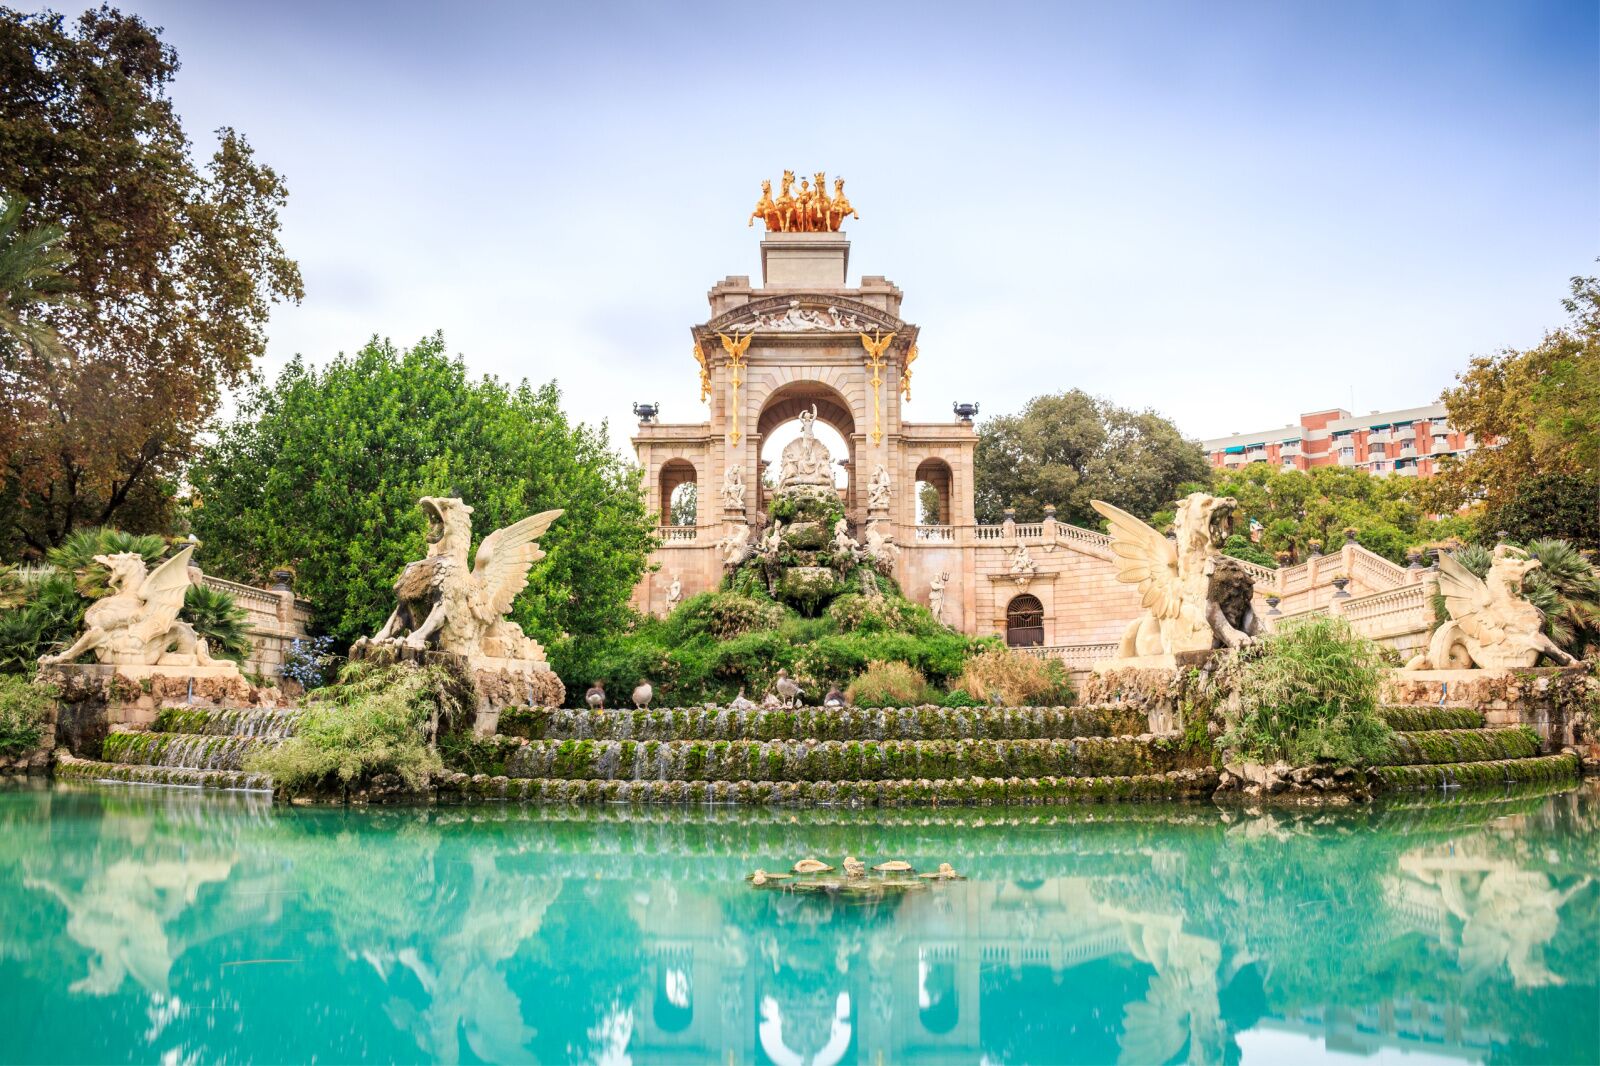 Parc-de-la-Ciutadella, one of the most famous parks in Barcelona